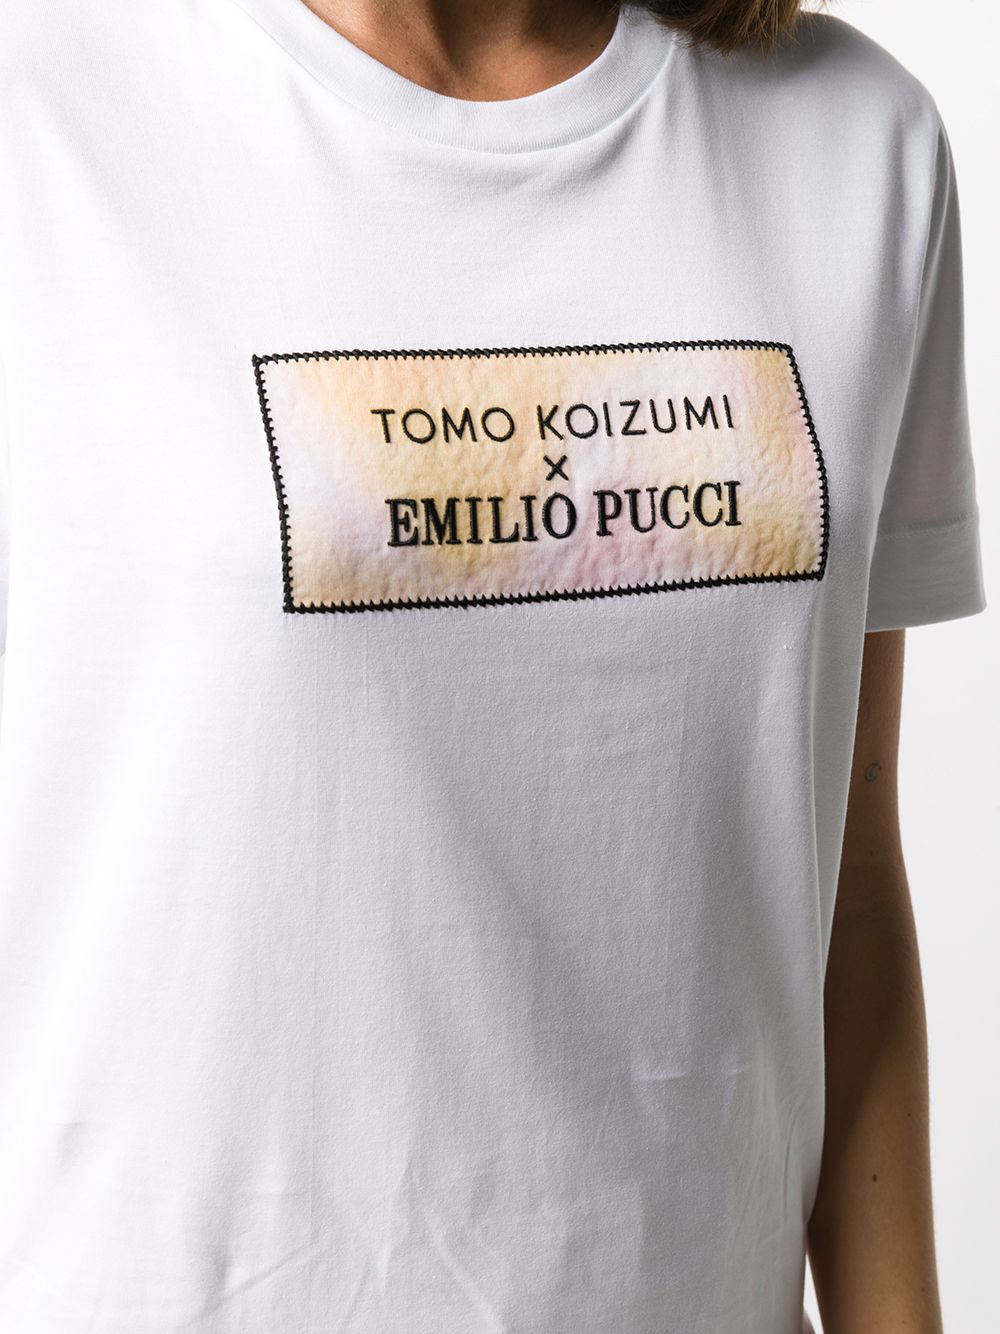 фото Emilio pucci футболка из коллаборации с tomo koizumi